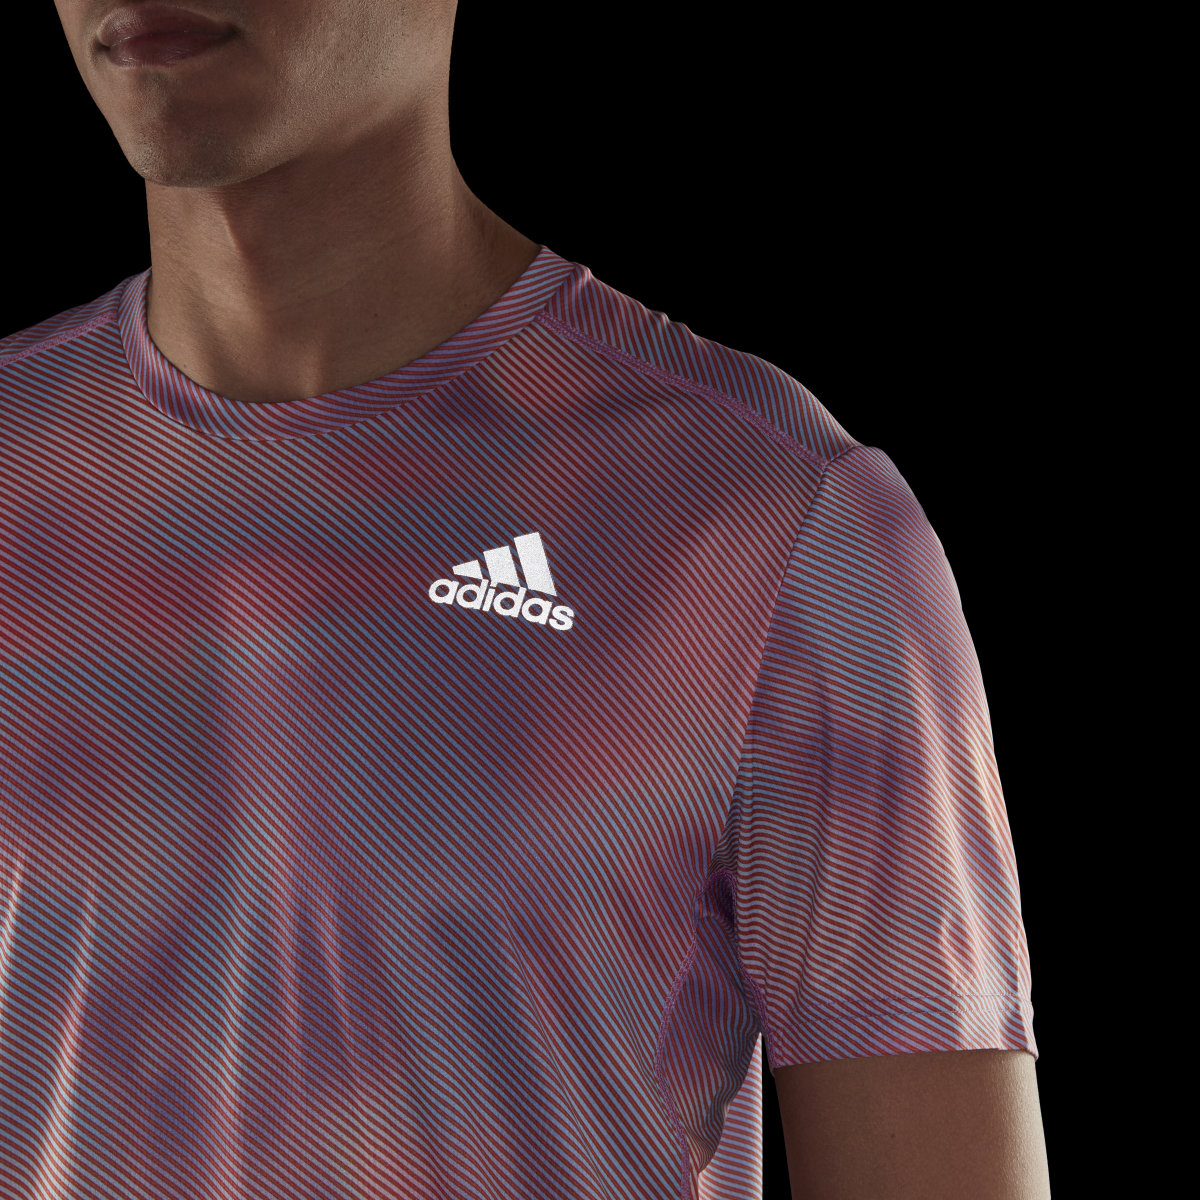 Adidas Own the Run Colorblock T-Shirt. 6